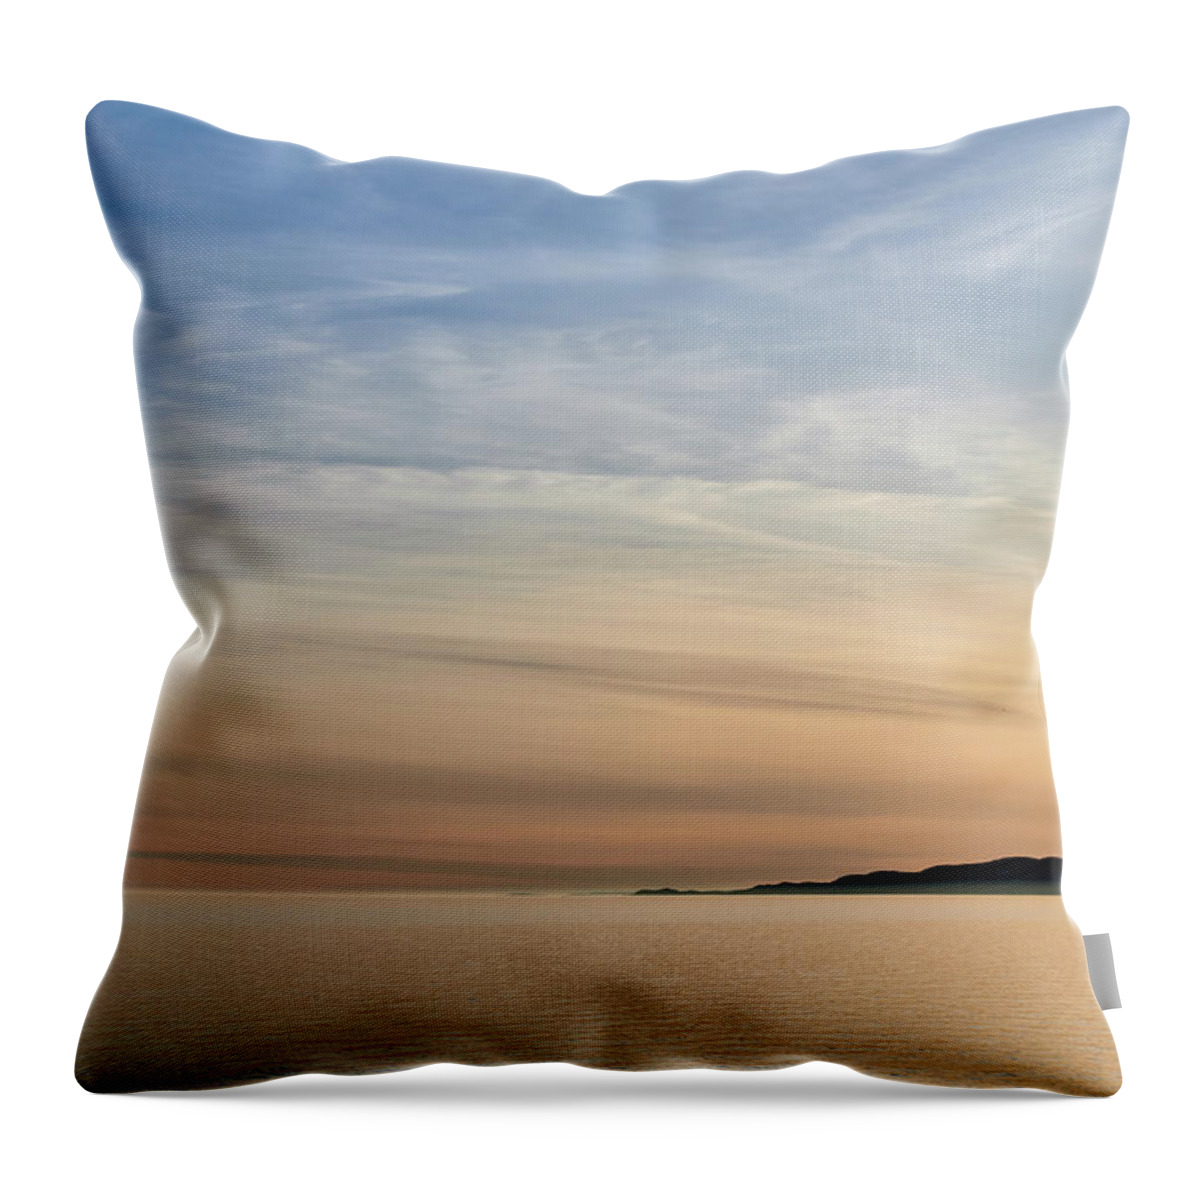 Horizon Throw Pillow featuring the photograph Adrift by Doug Gibbons